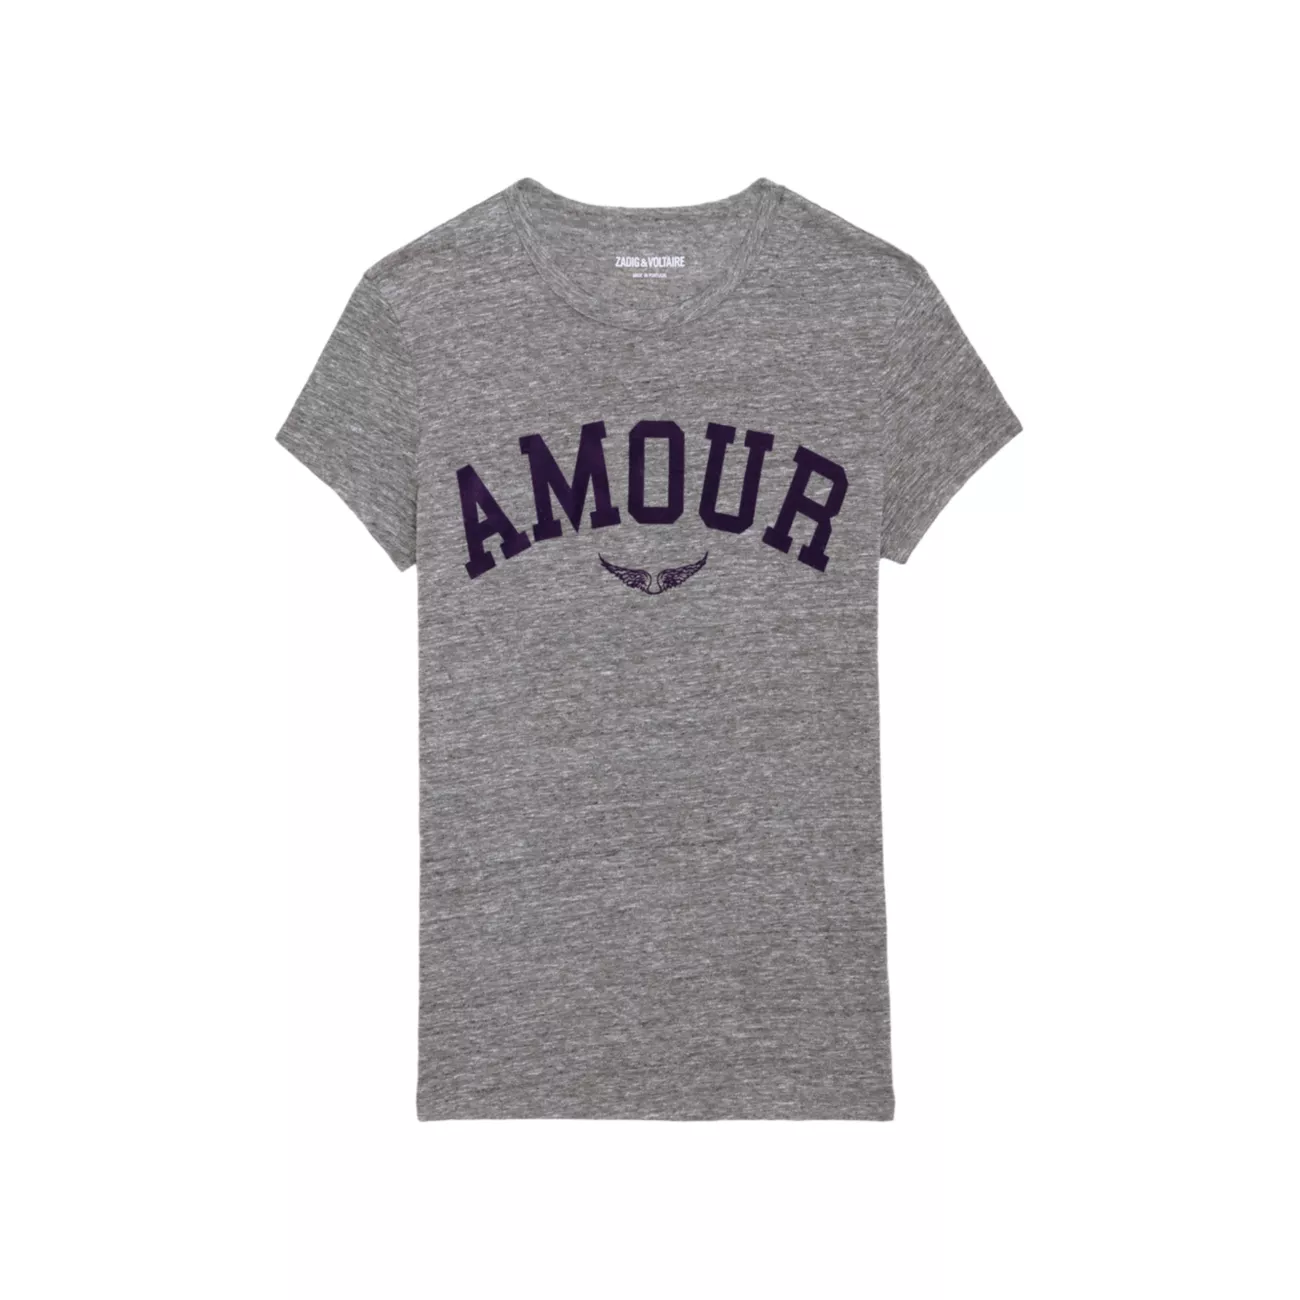 Walk Amour Logo T-Shirt Zadig & Voltaire